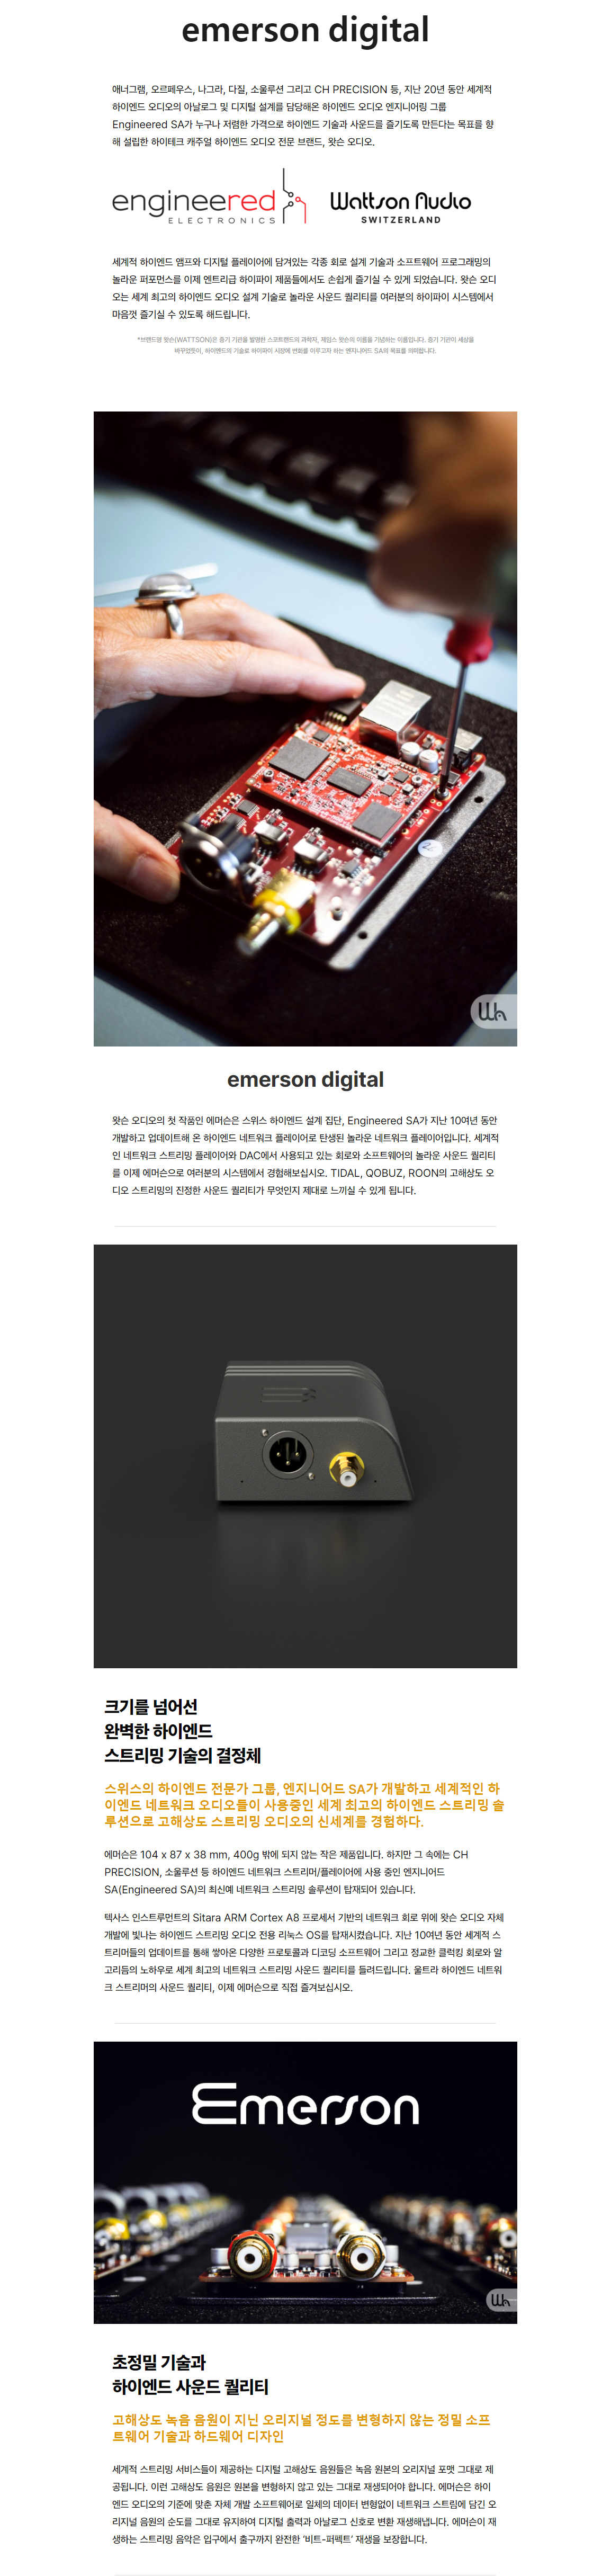 emerson-digital-spec1_110104.jpg